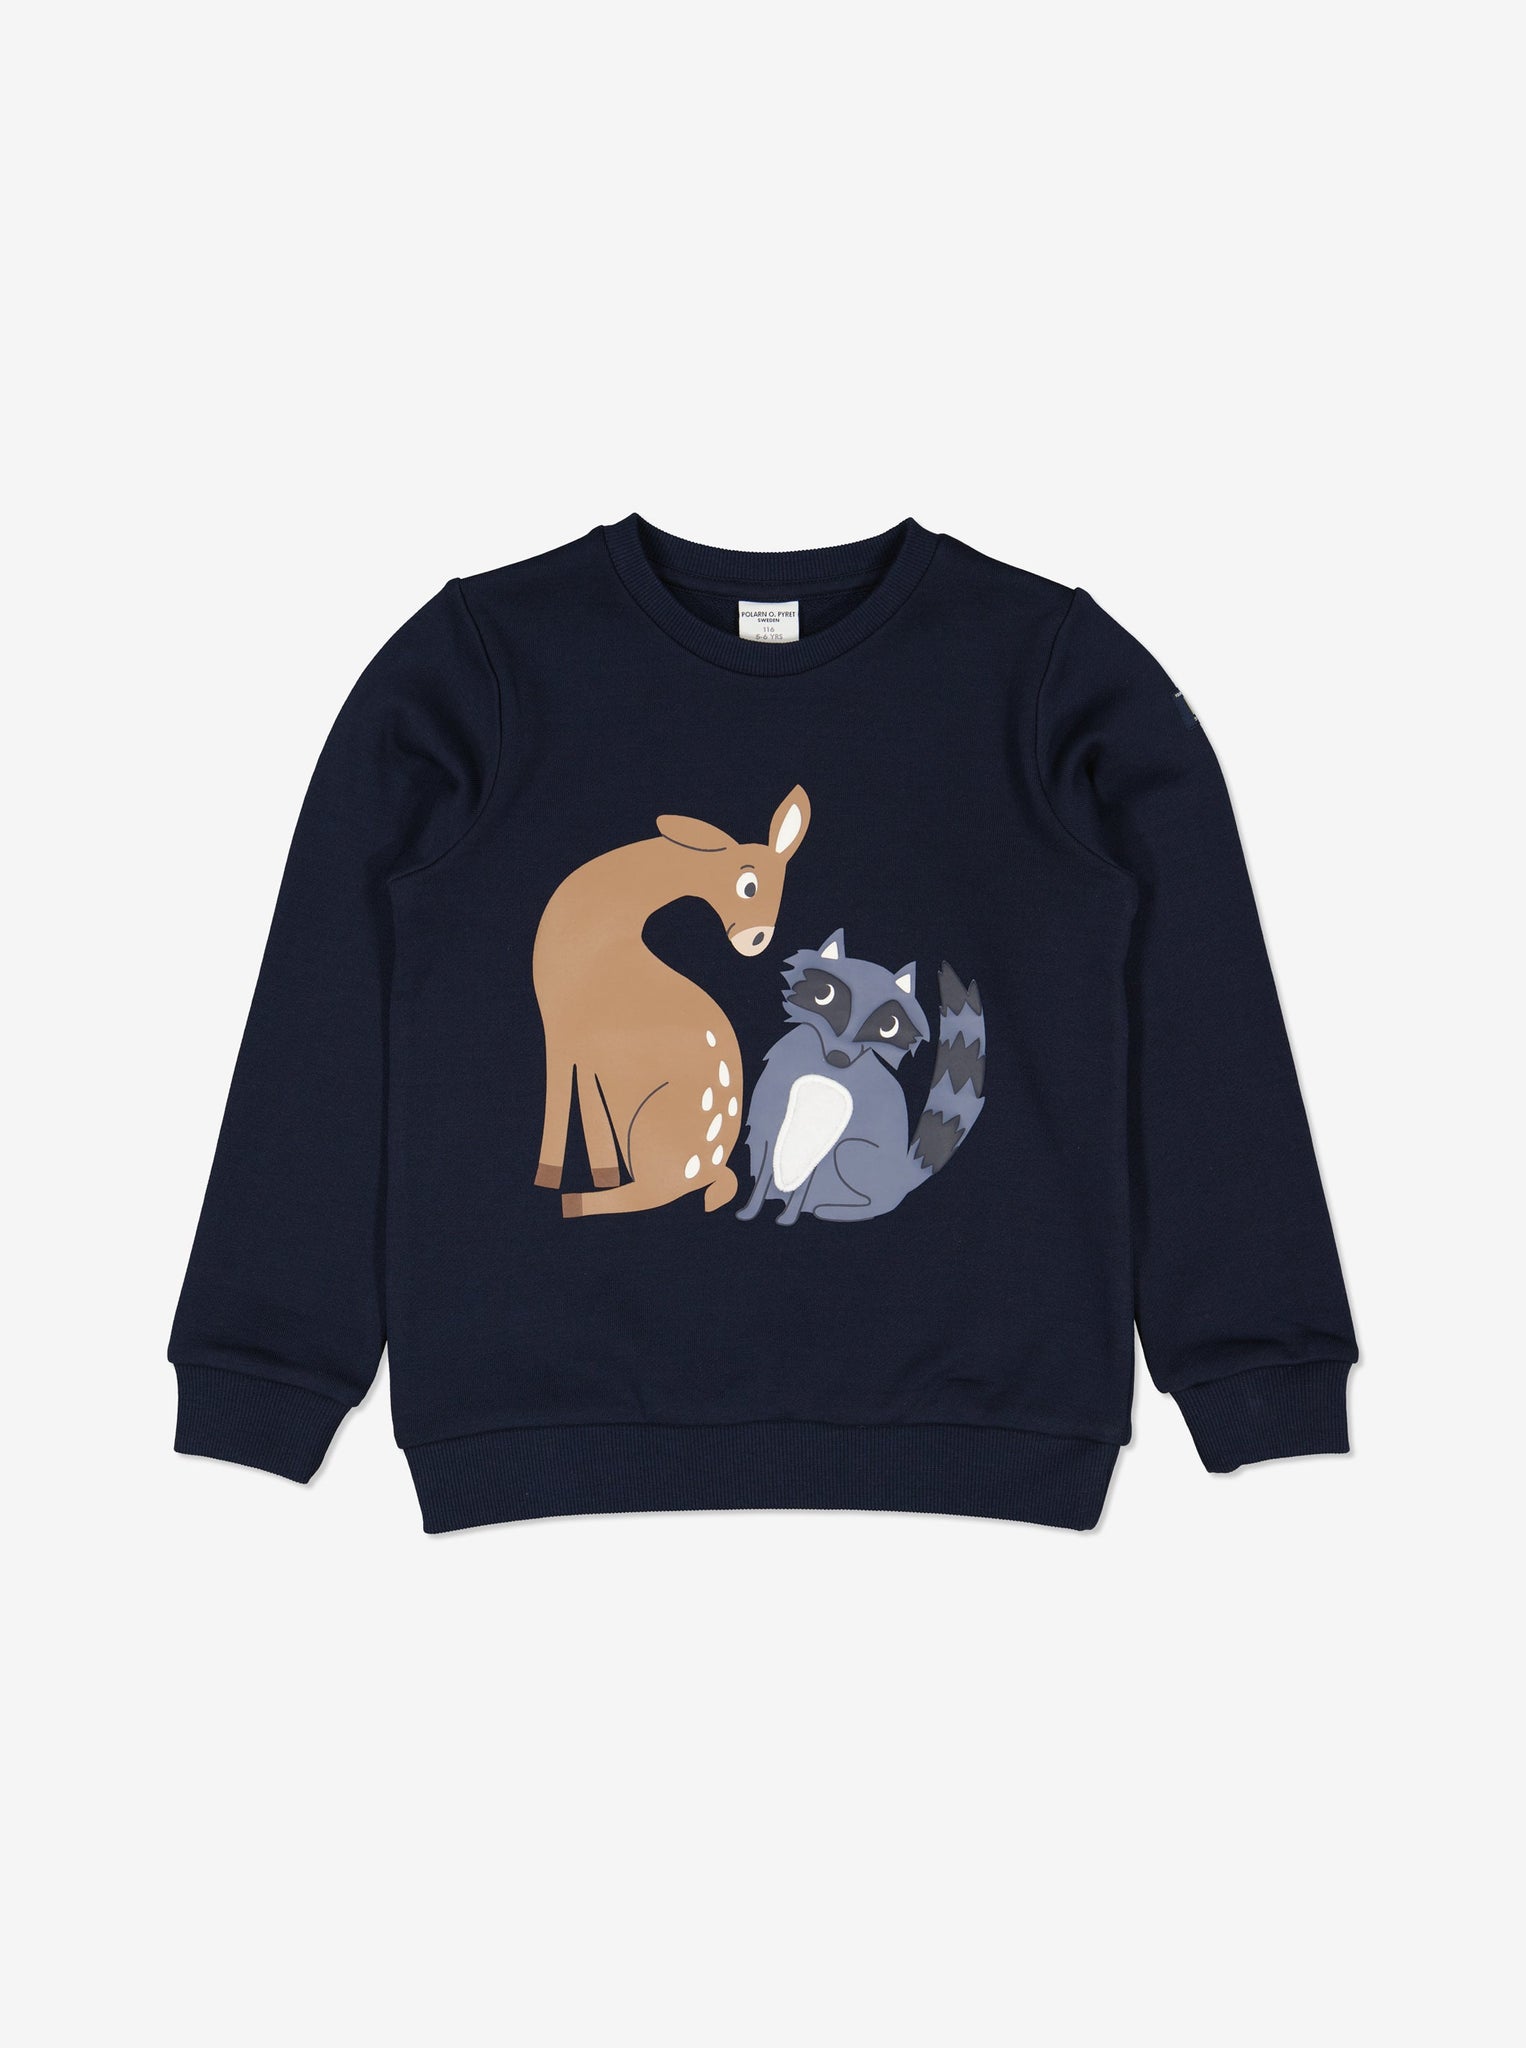  Navy Animal Print Kids Sweatshirt from Polarn O. Pyret Kidswear. Made using eco-friendly materials.